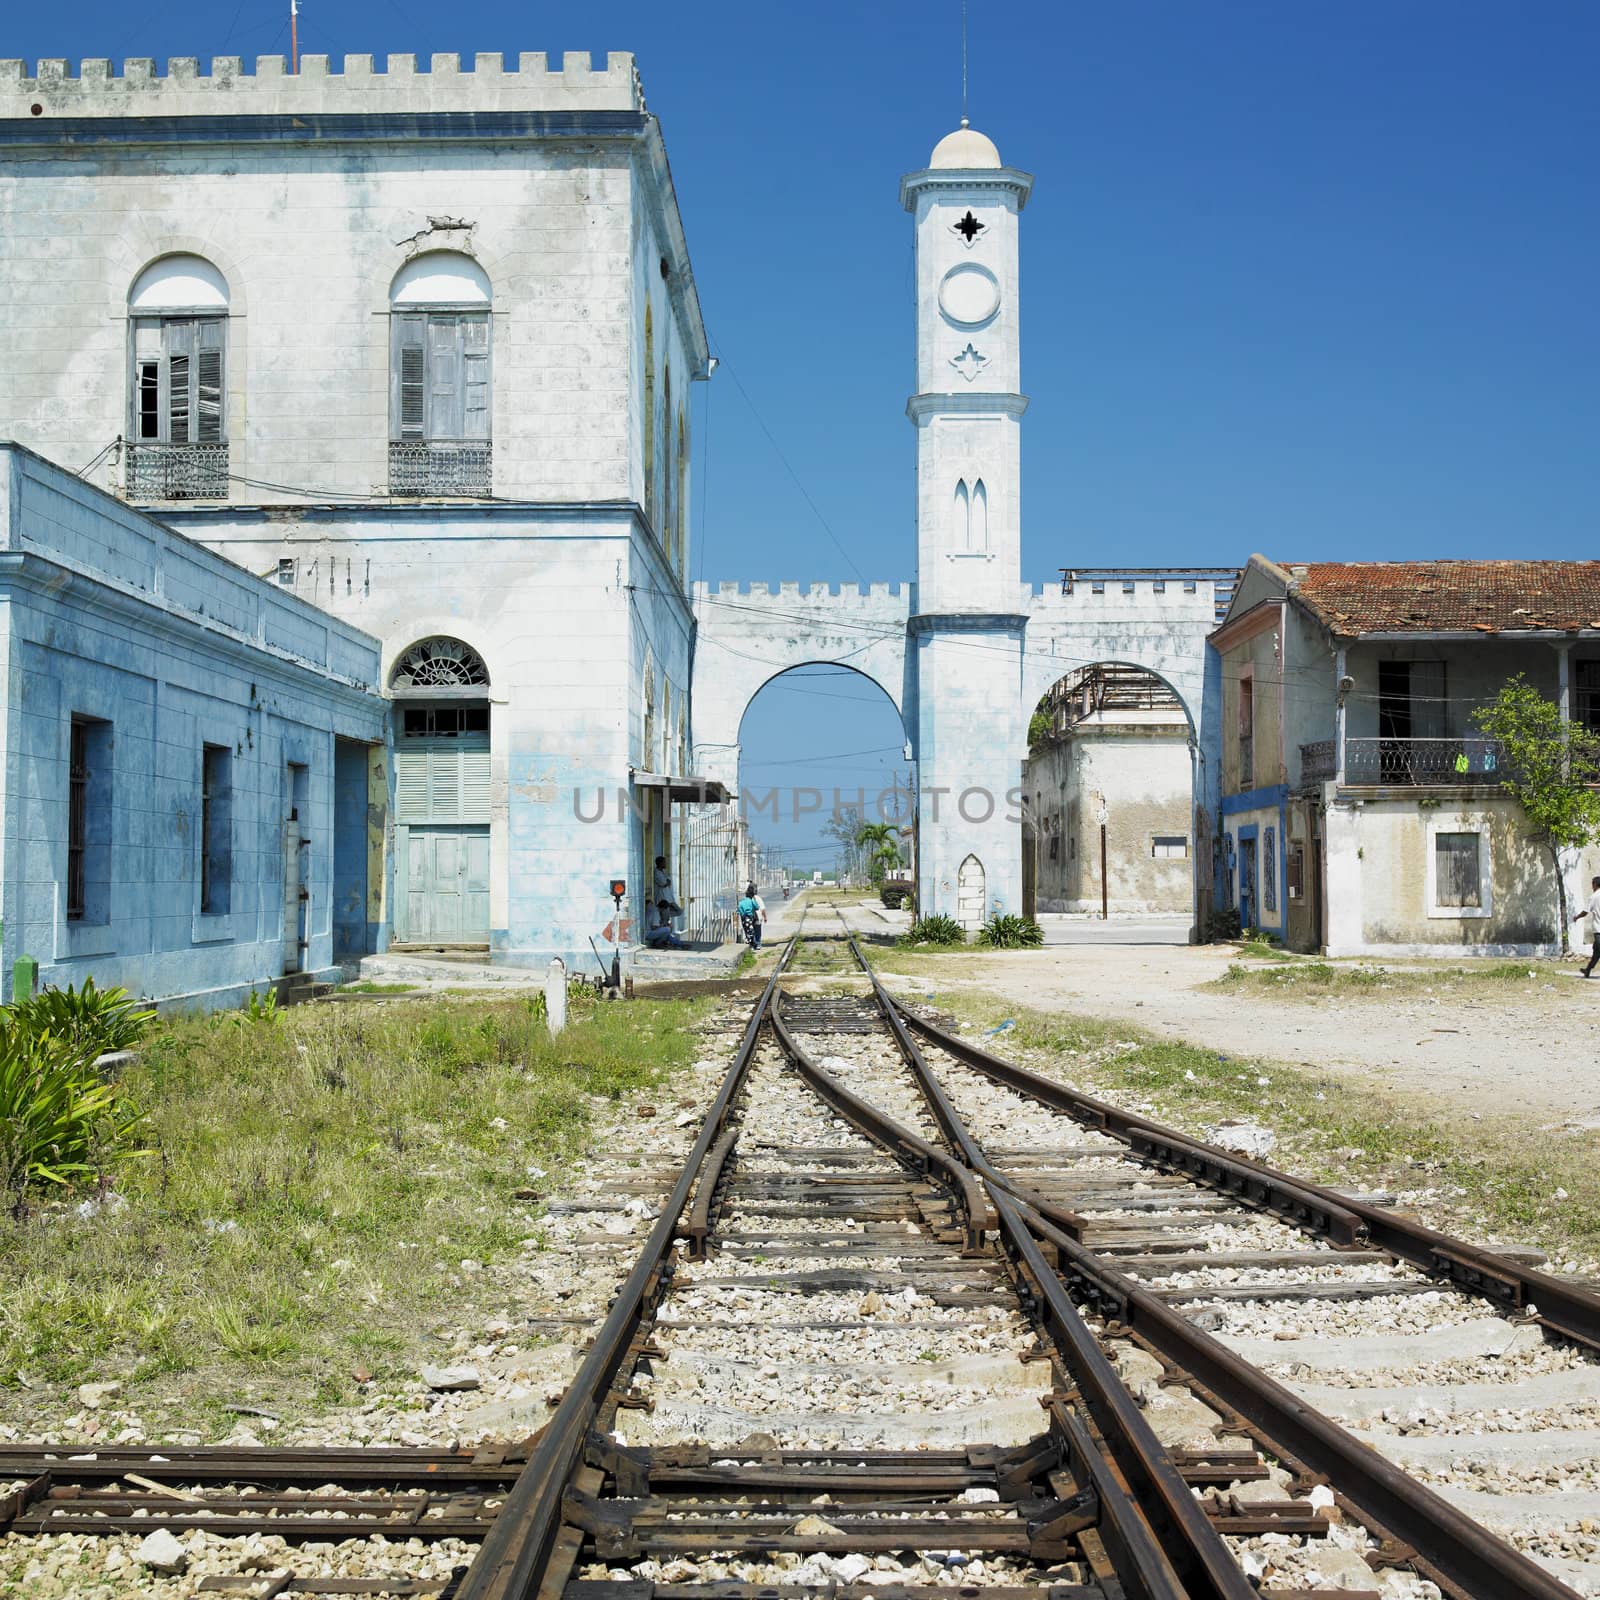 railway station, C�rdenas, Matanzas Province, Cuba by phbcz